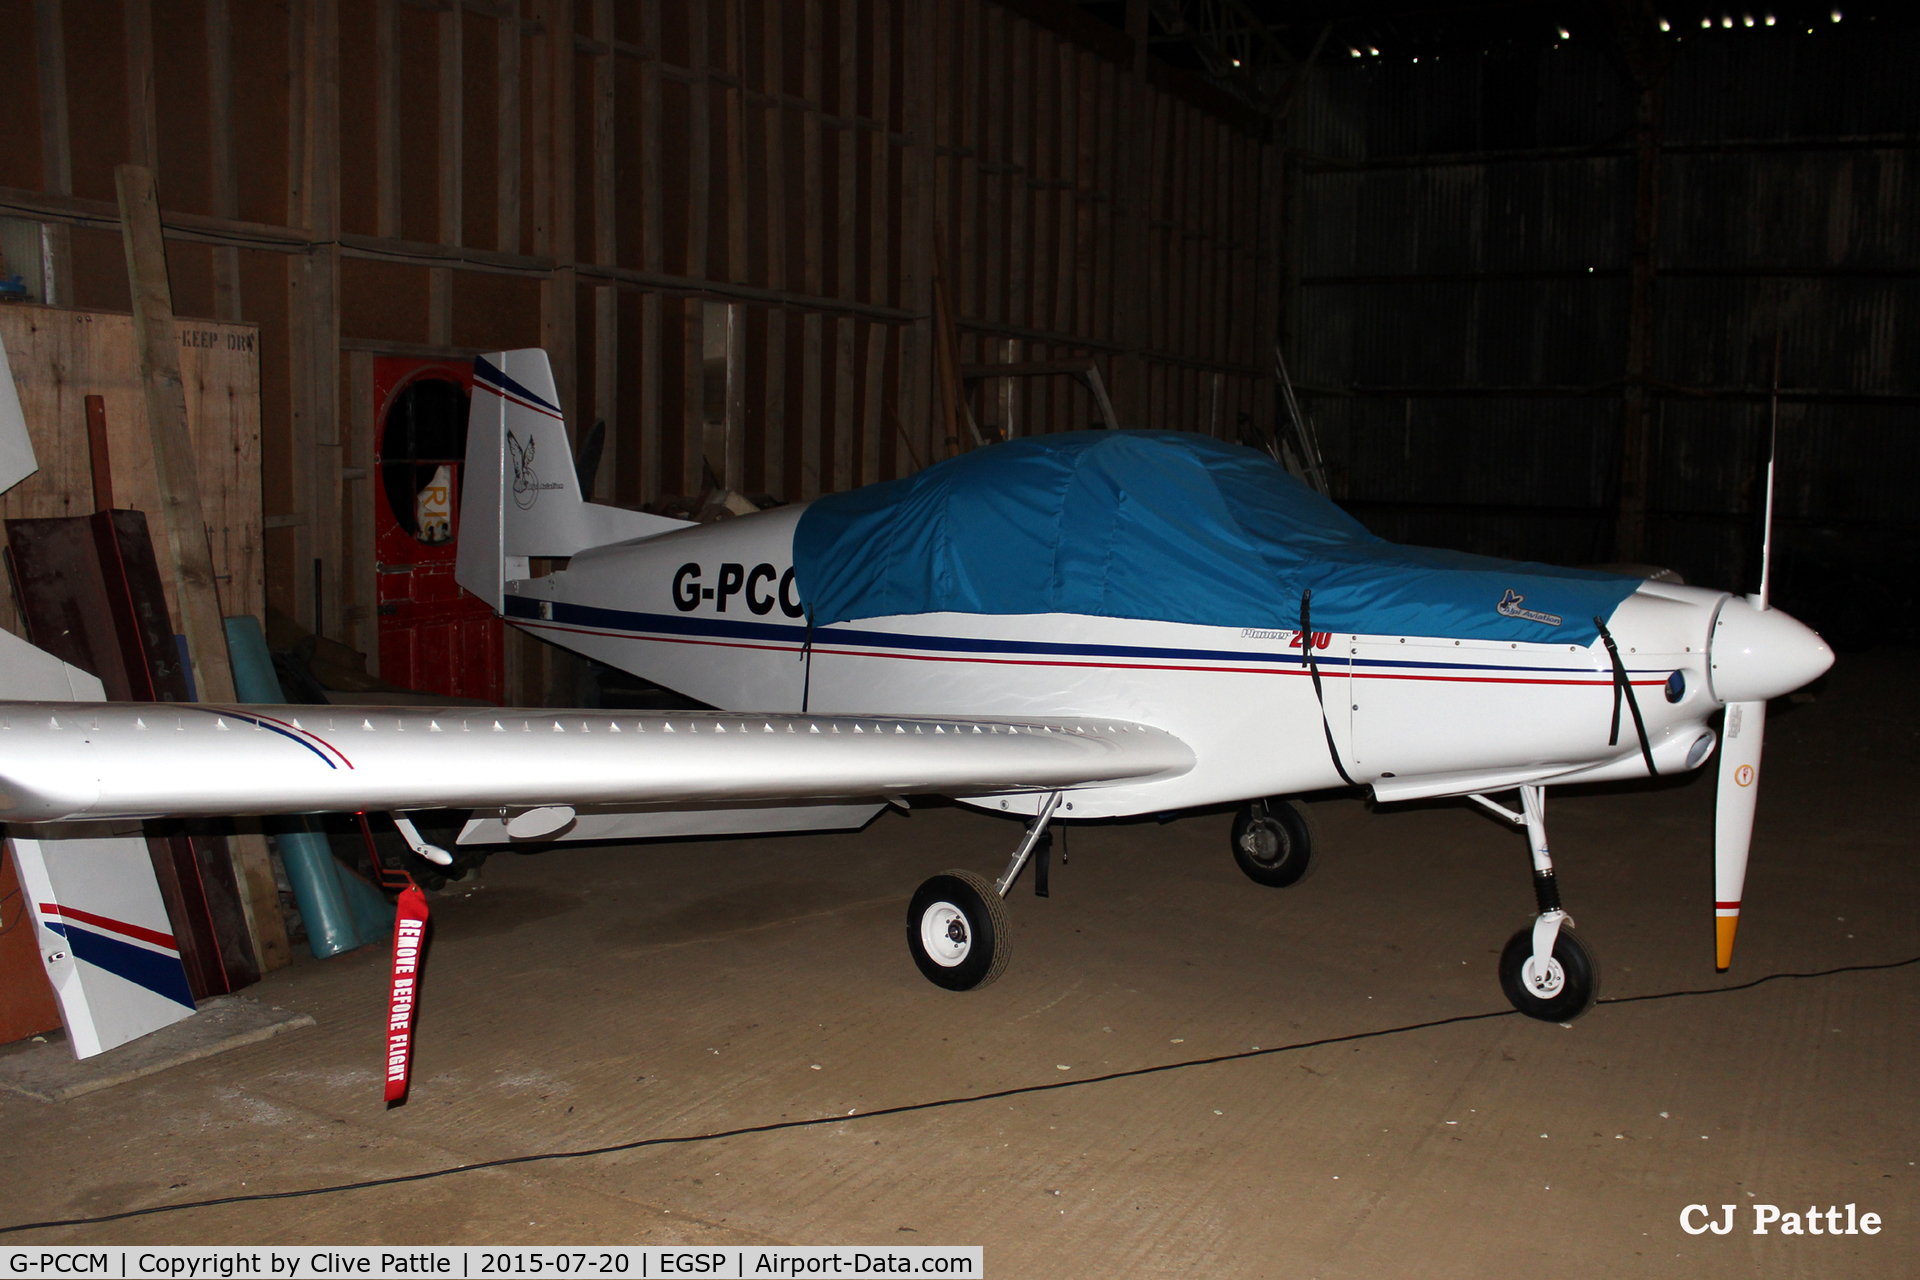 G-PCCM, 2014 Alpi Aviation Pioneer 200-M C/N LAA 334-15250, Hangared at Sibson EGSP